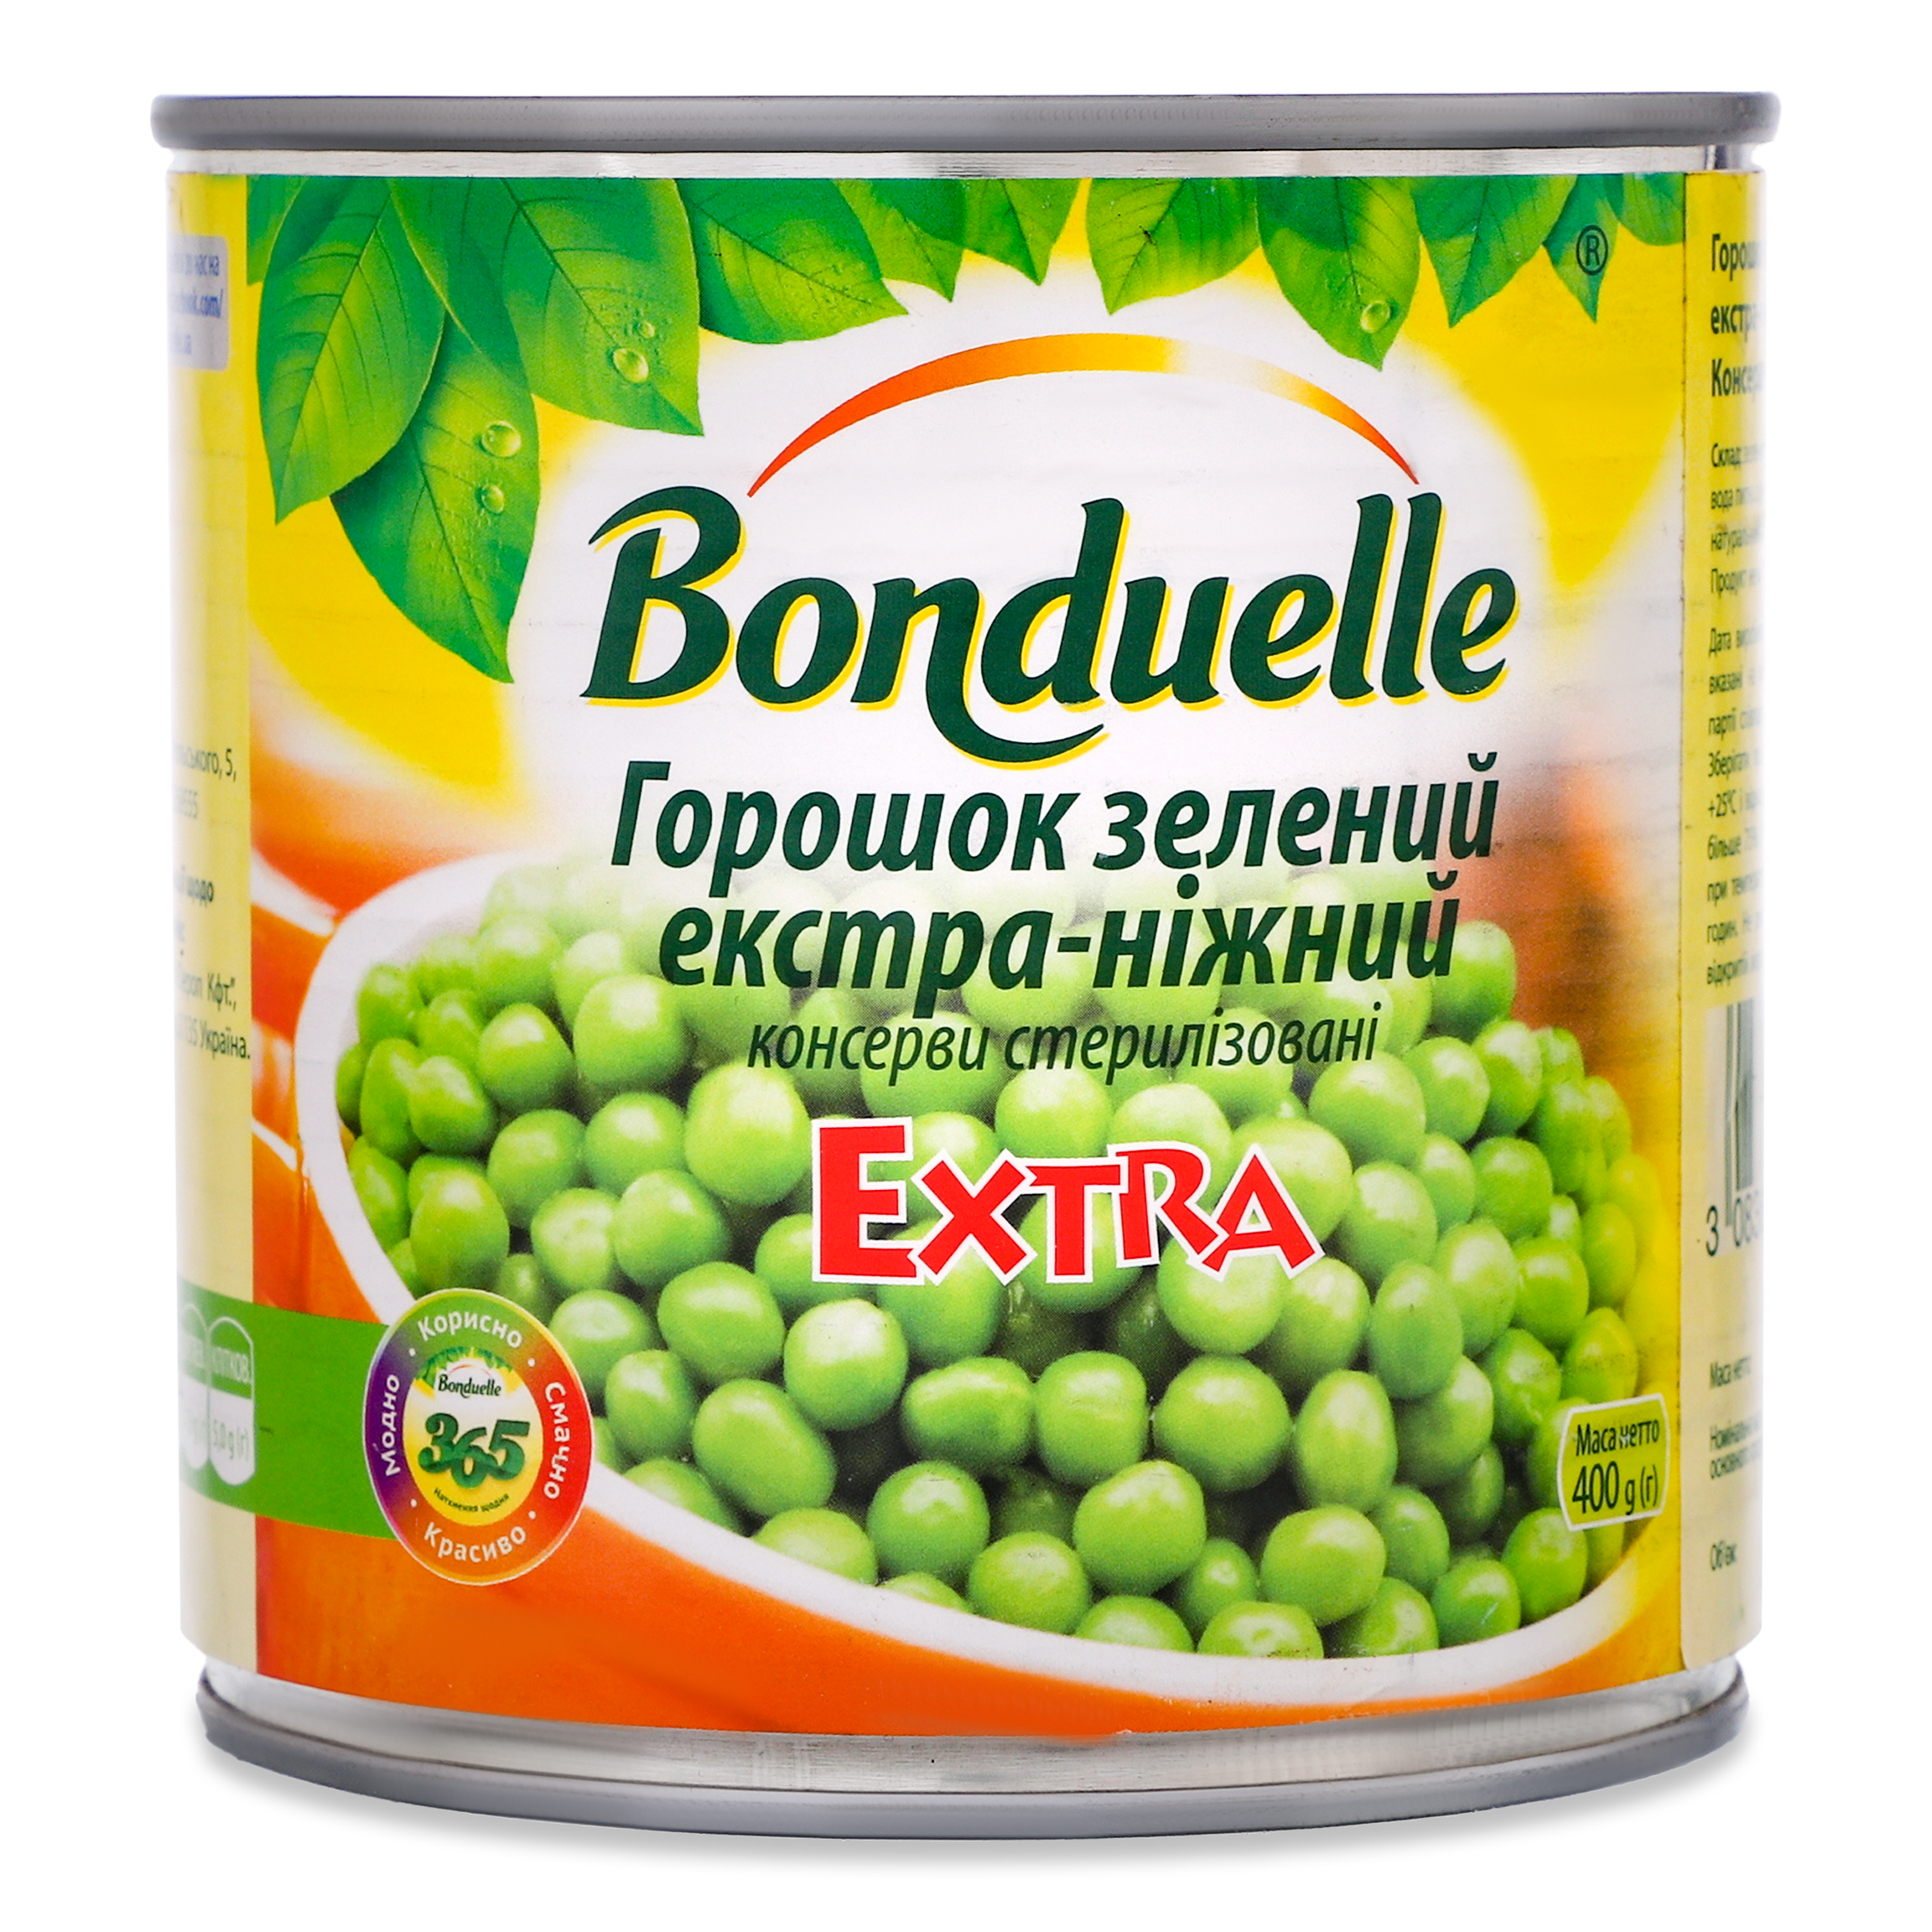 Bonduelle Extra Soft Green Peas